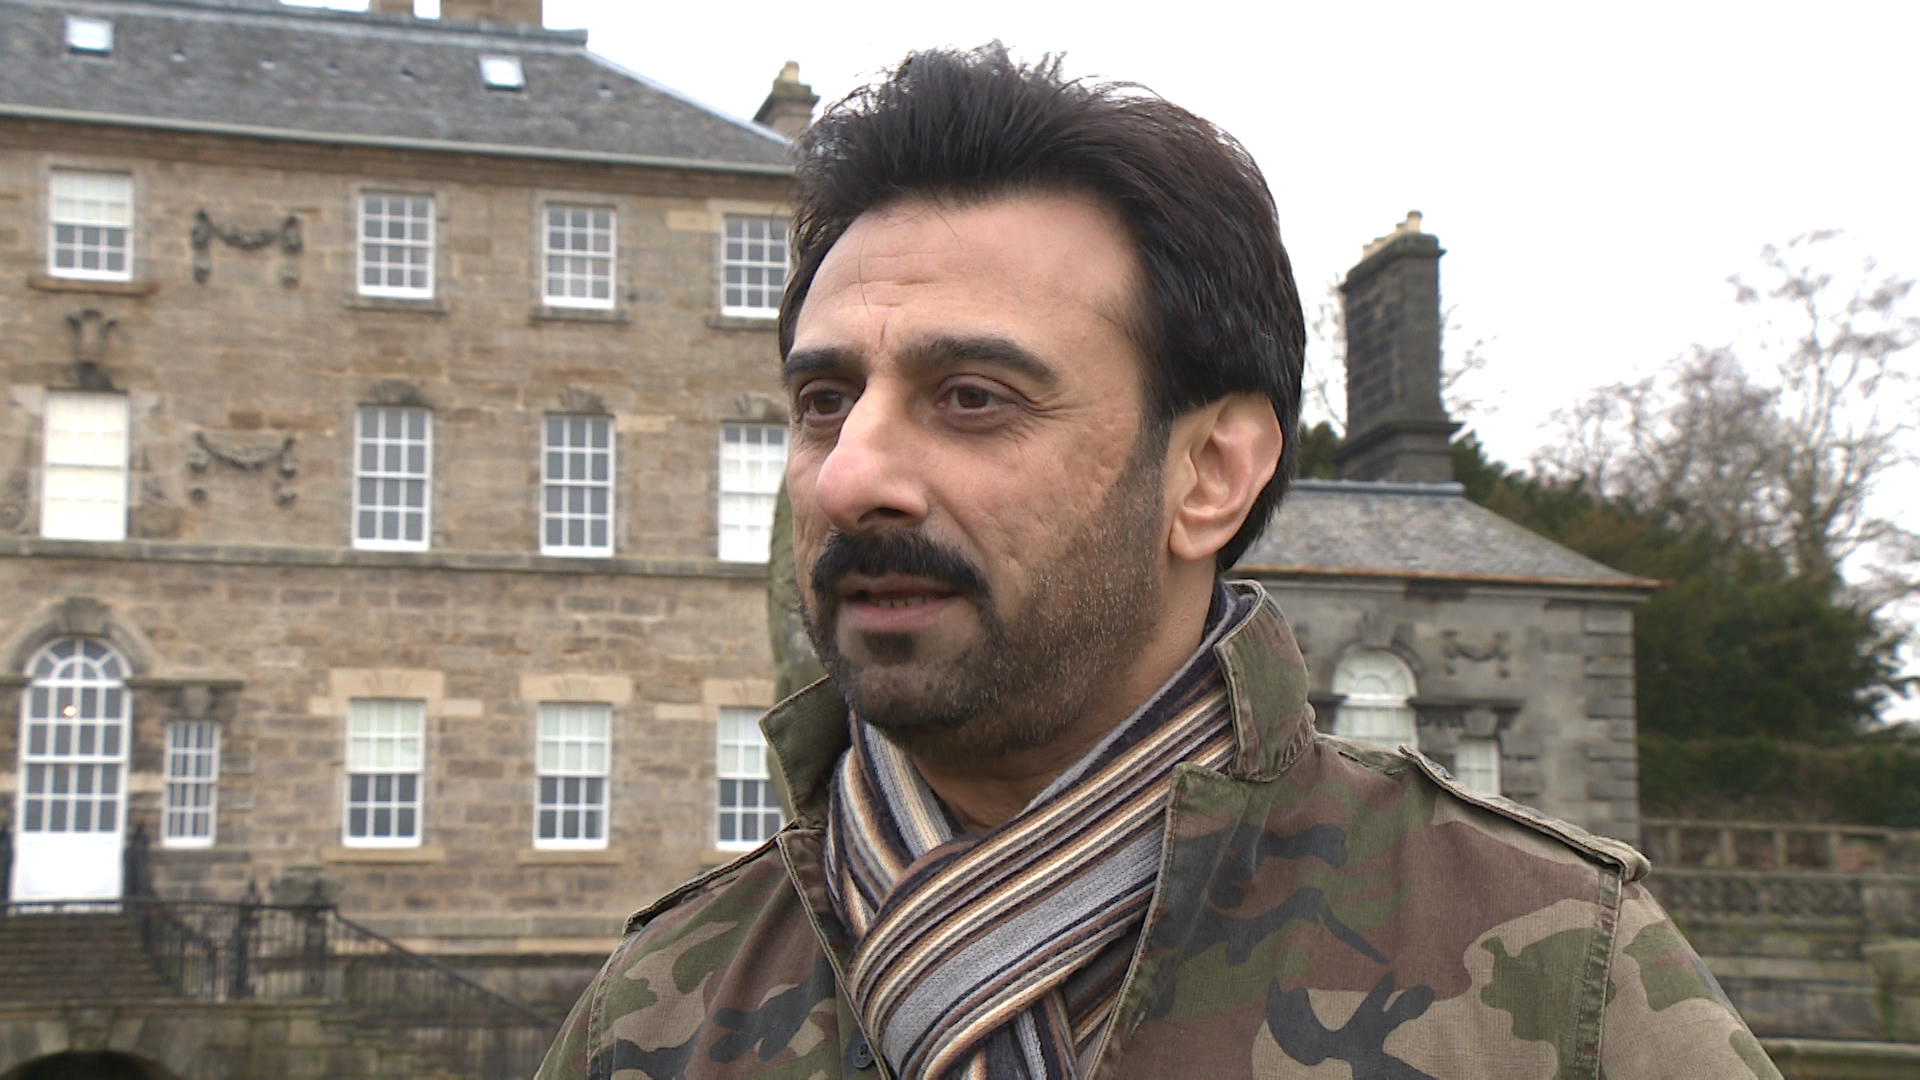 Director Zulfikar Sheikh wanted to shoot the film in Scotland.